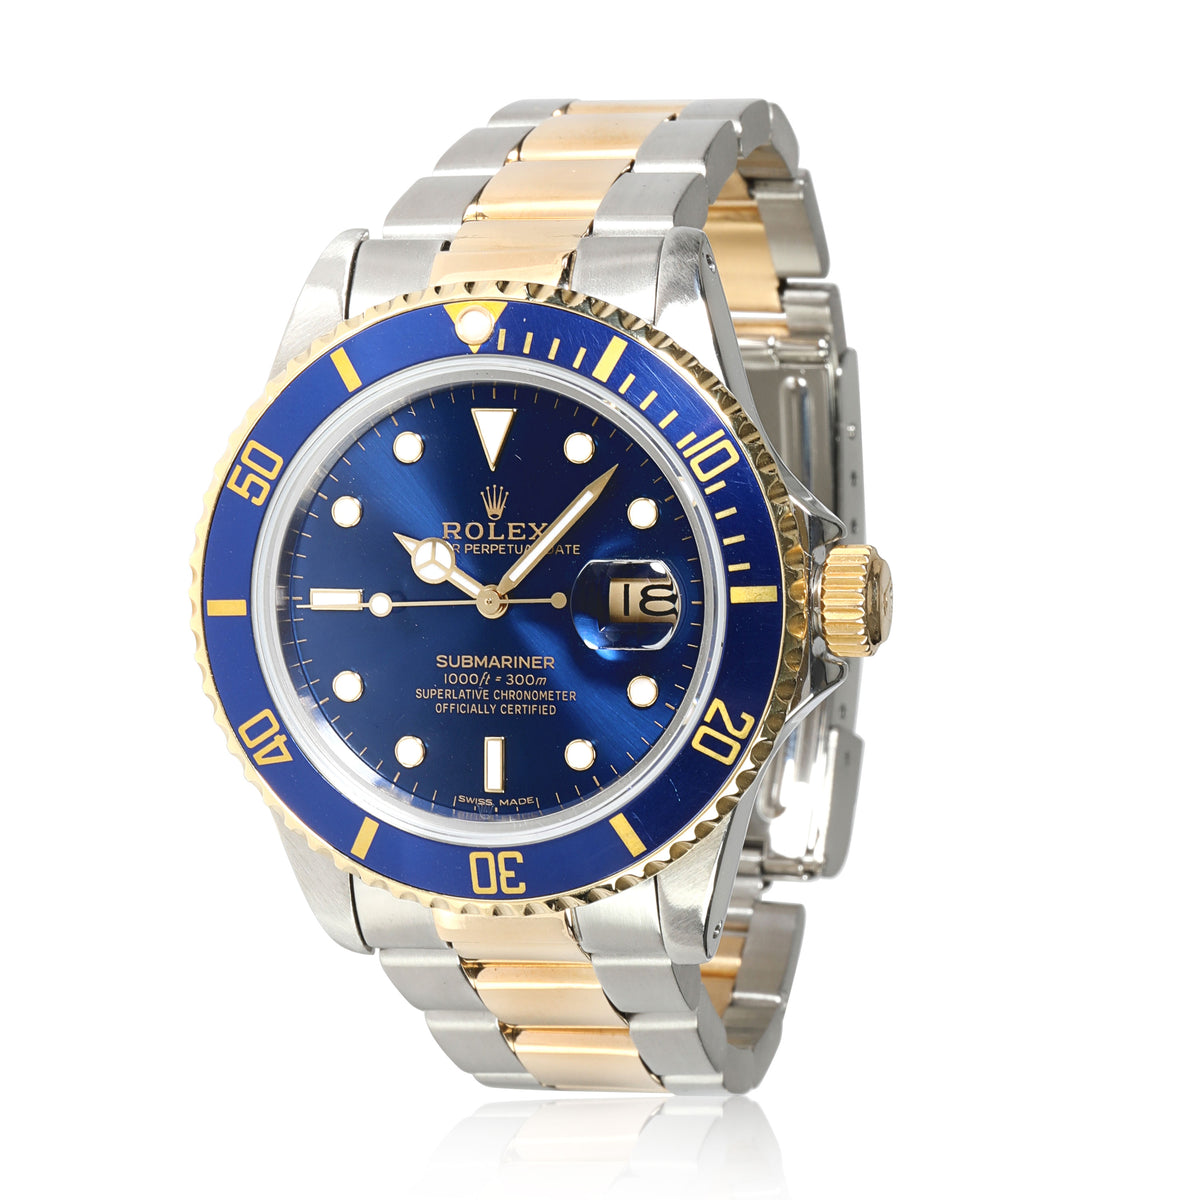 Rolex Submariner 16803 Men's Watch in 18kt Stainless Steel/Yellow Gold